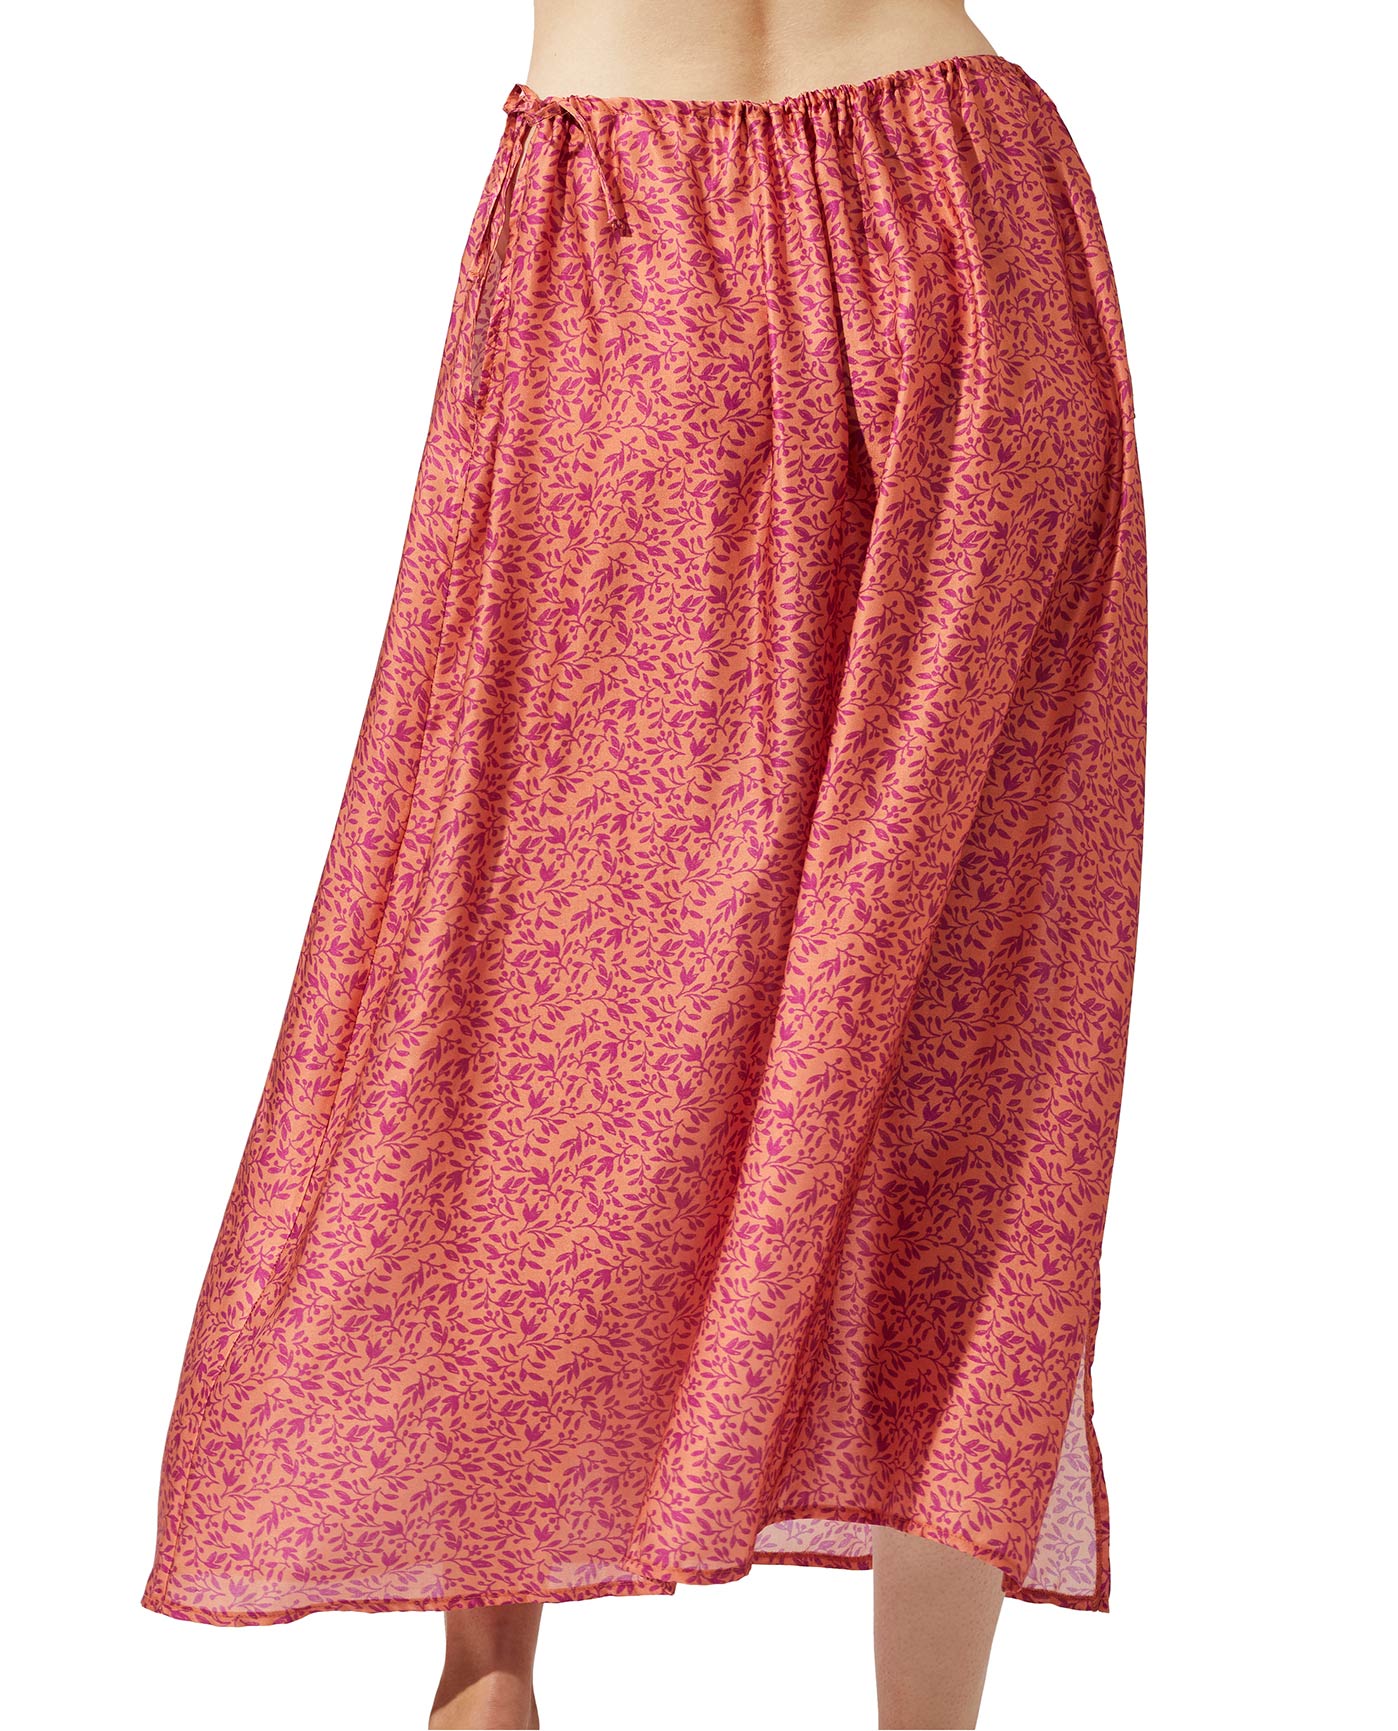 Back View Of Luma Long Cover Up Skirt | LUMA POPPY